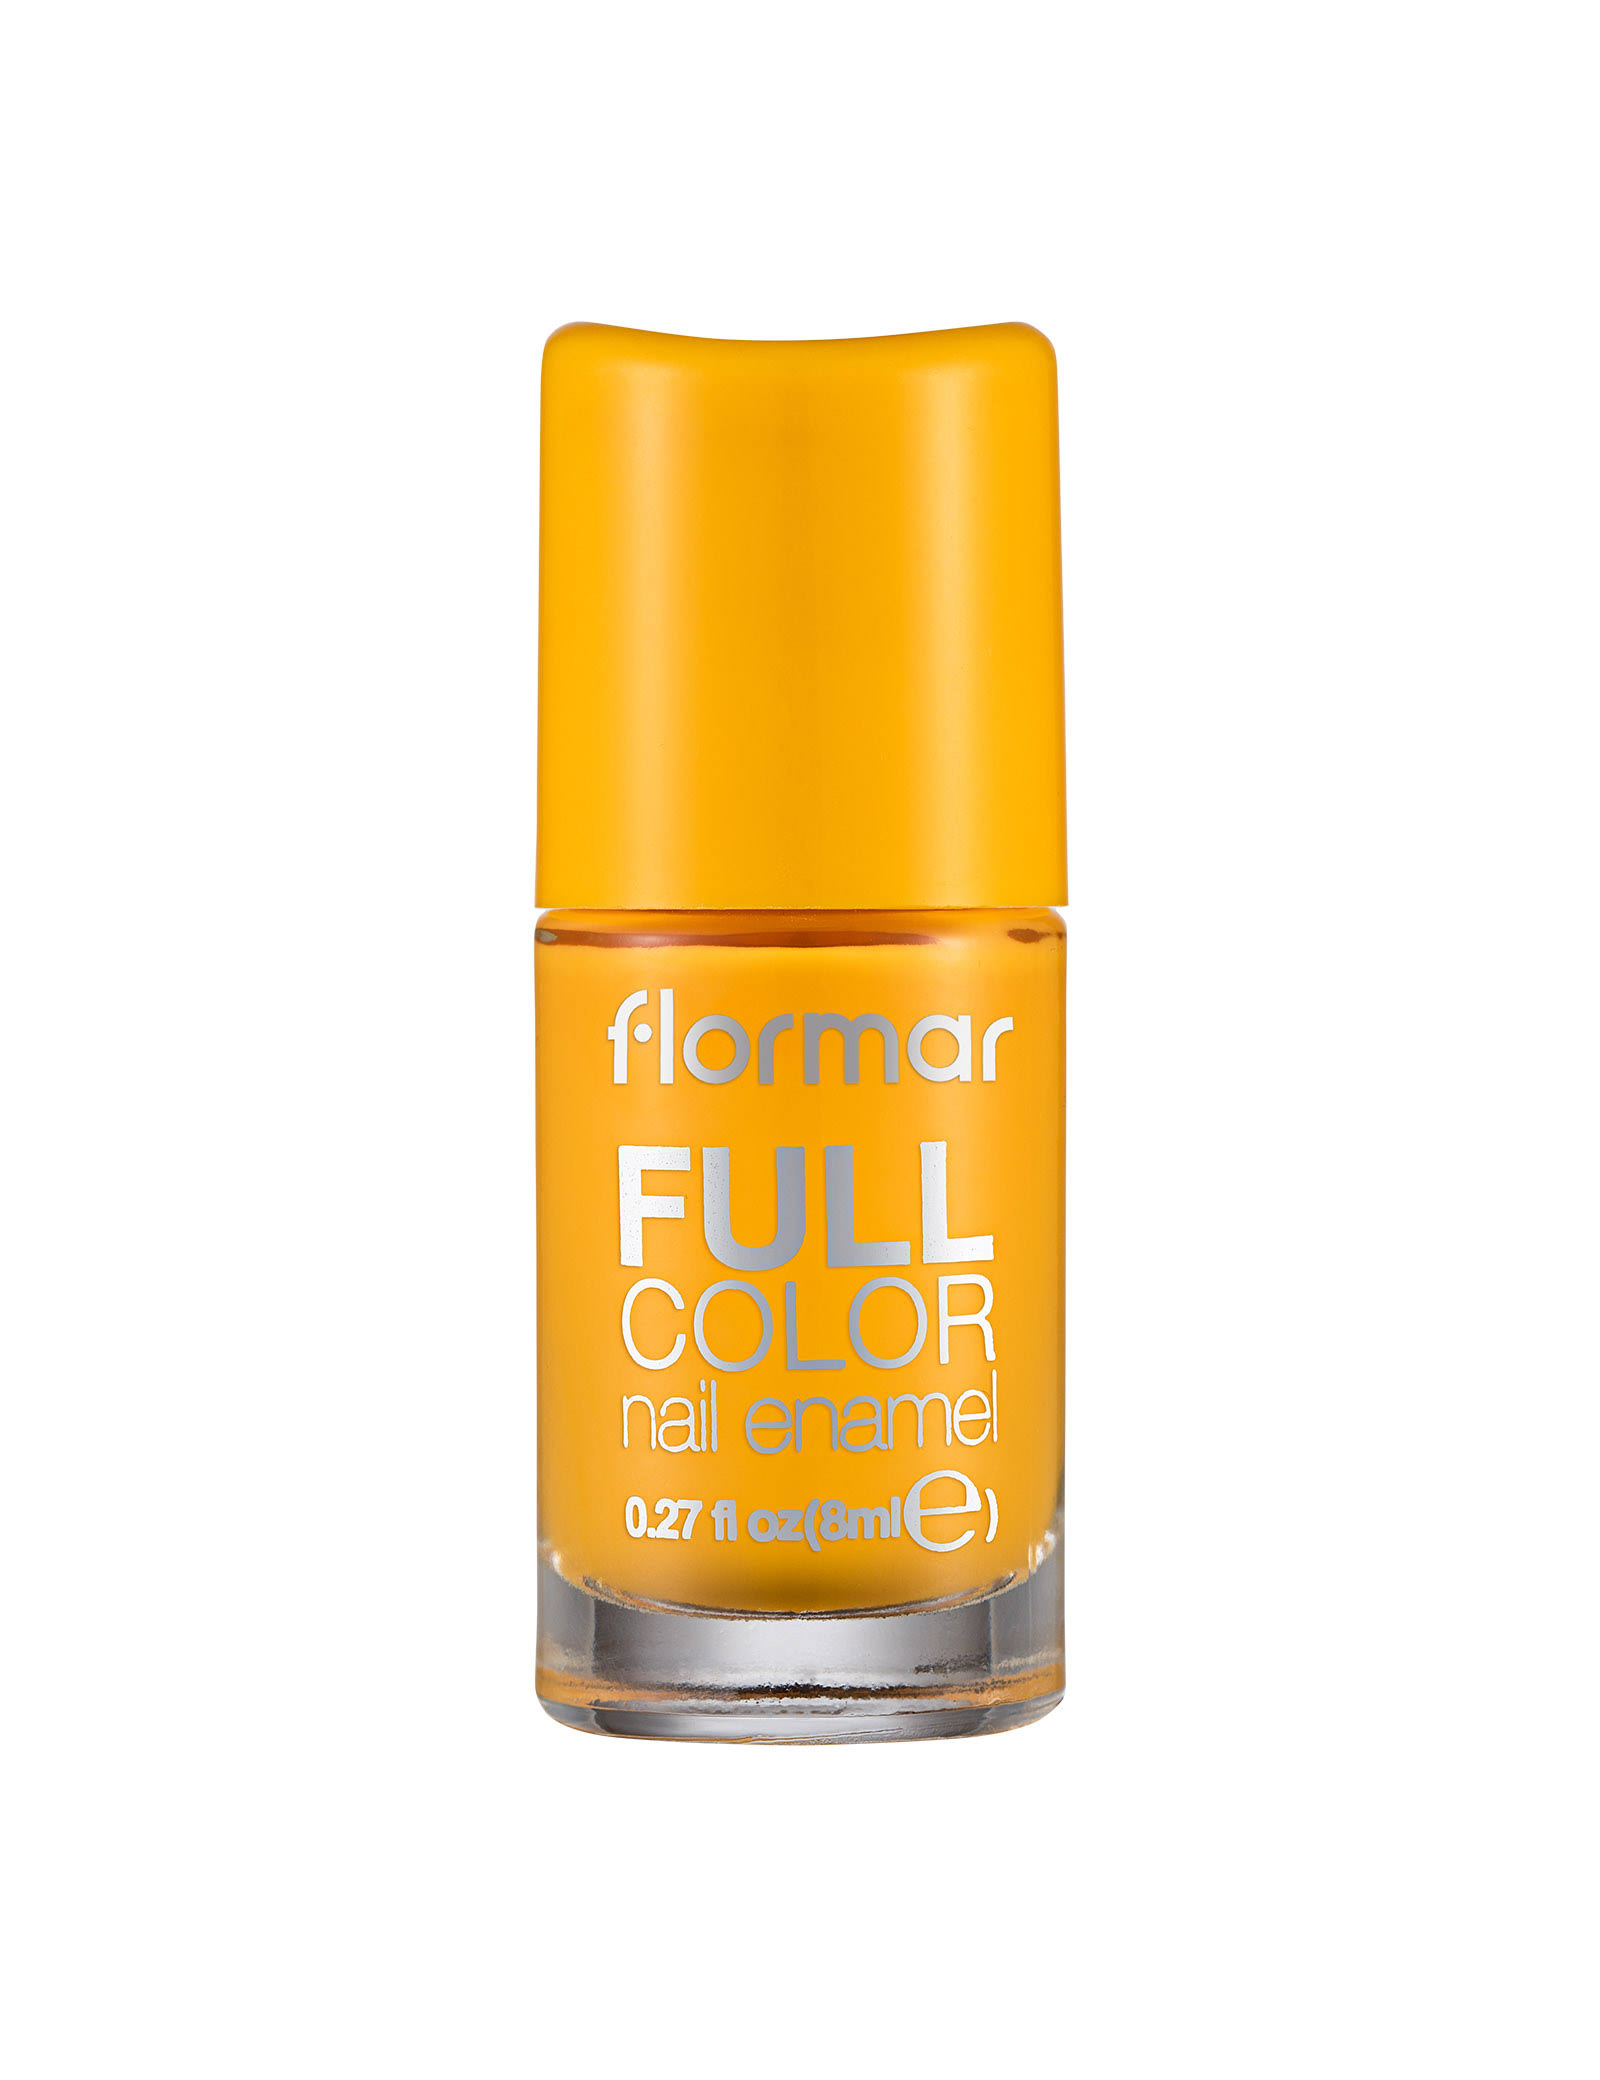 Flormar Full Color Nail Polish - Fc47 Lemoncello, 0.27oz